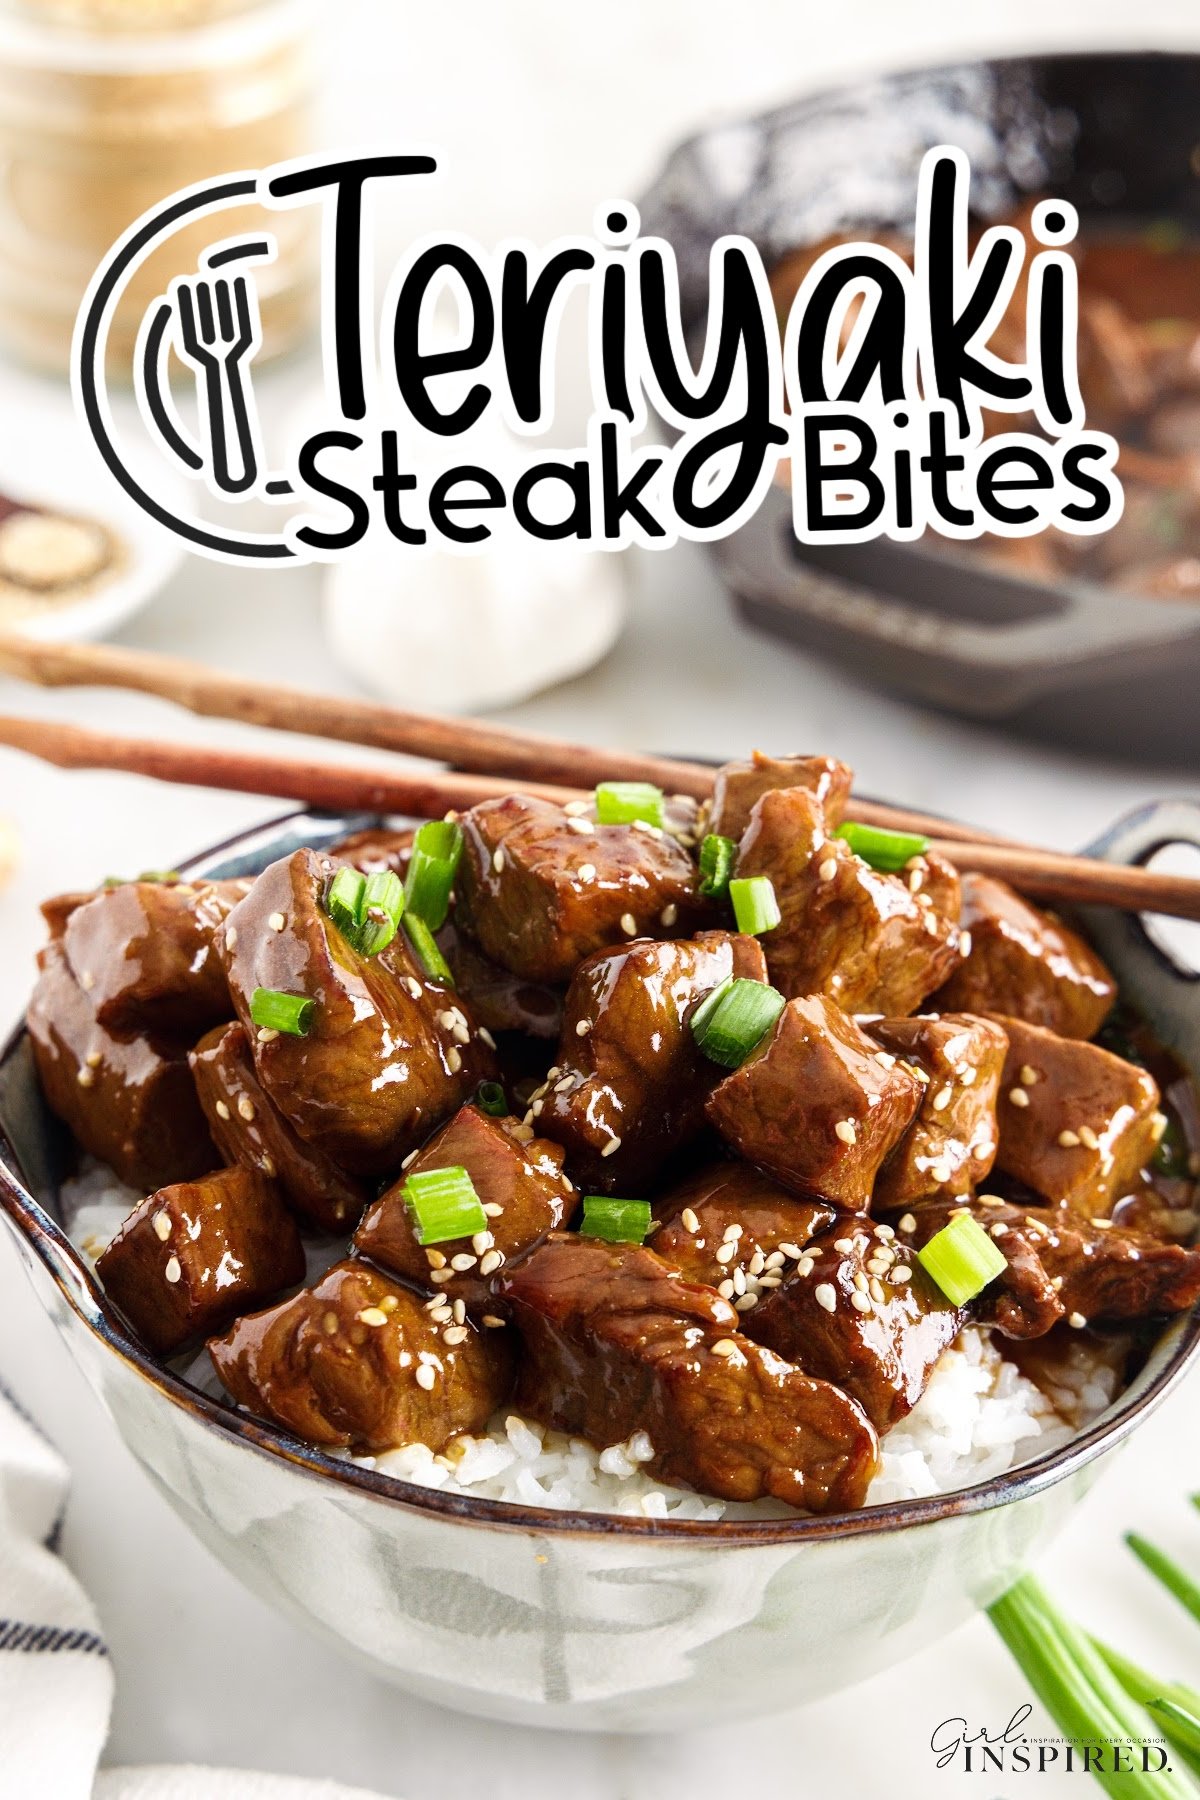 Teriyaki steak bites over rice with text overlay.